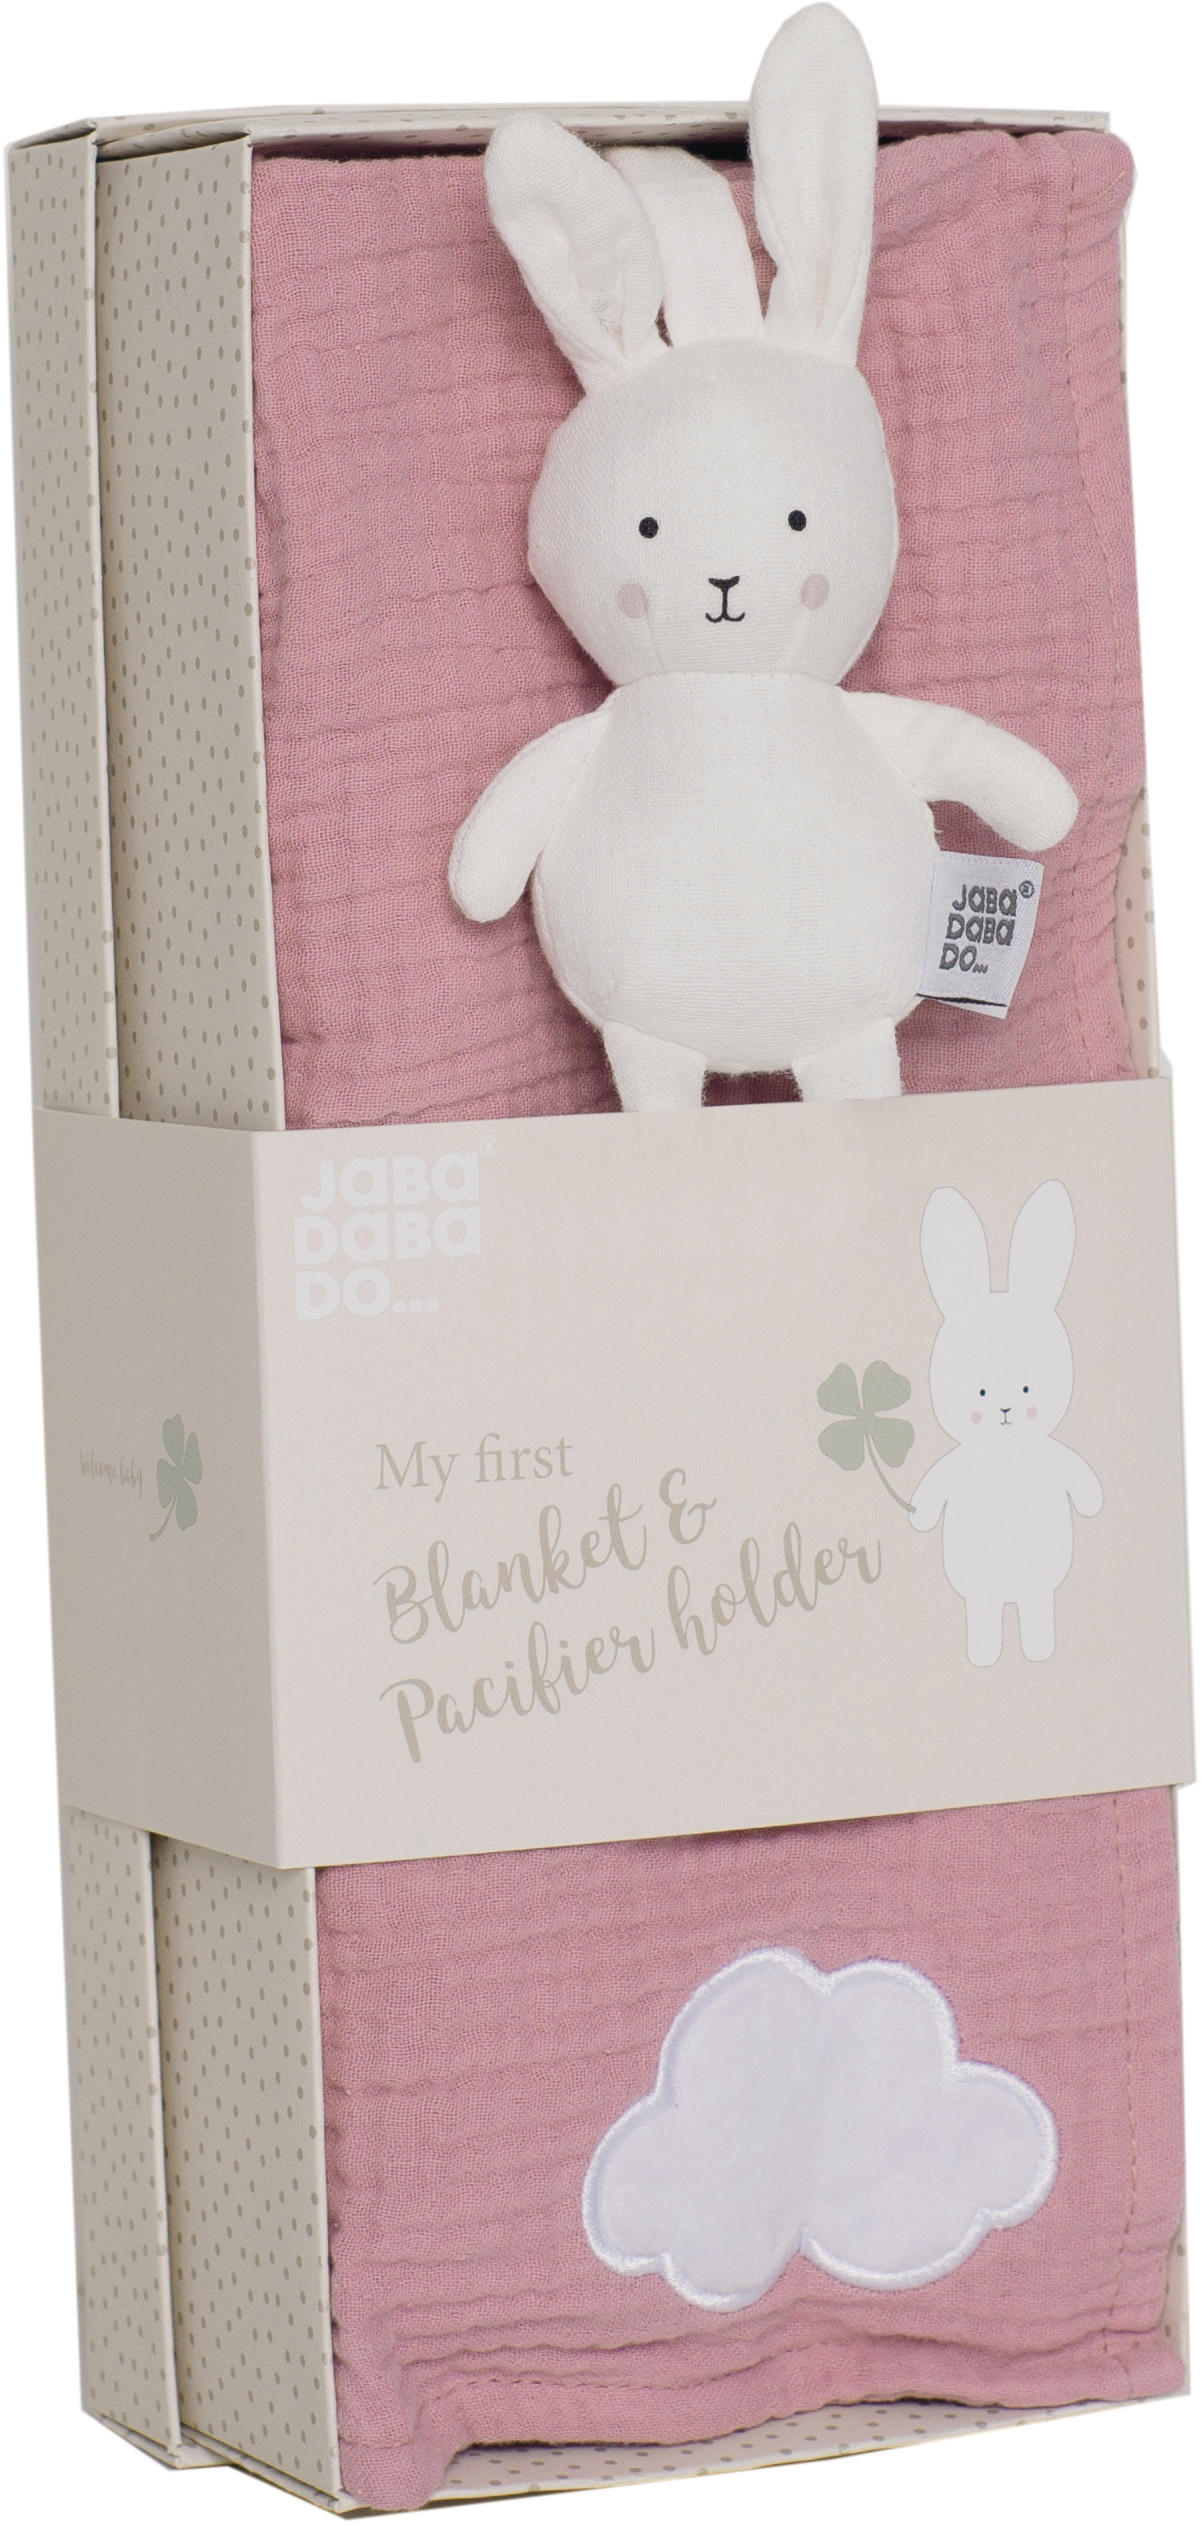 JABADABADO Gift kit buddy bunny N0181 pink, blanket, pacifier